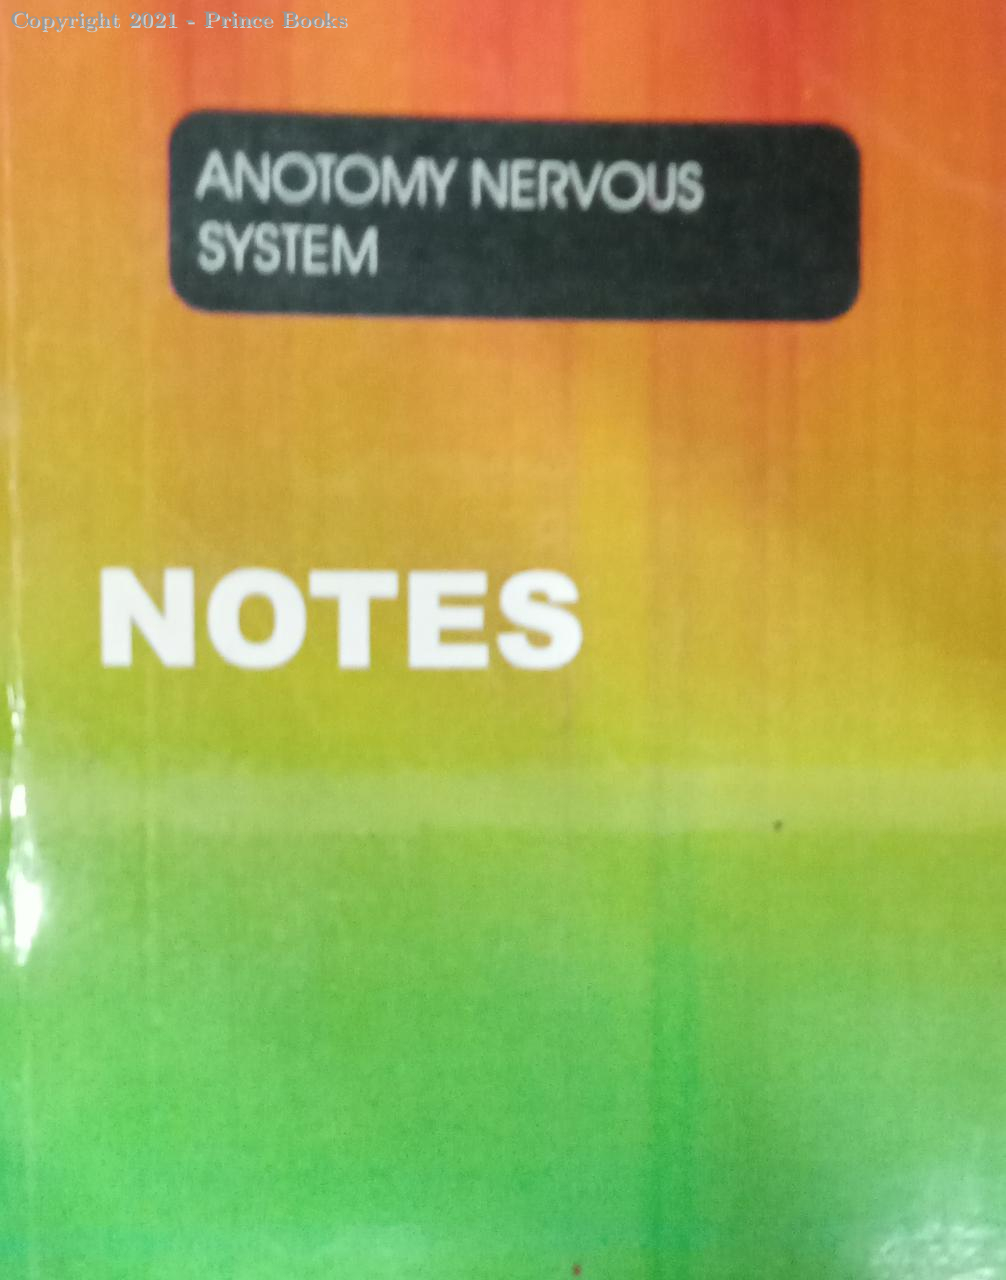 anotomy nervous system notes